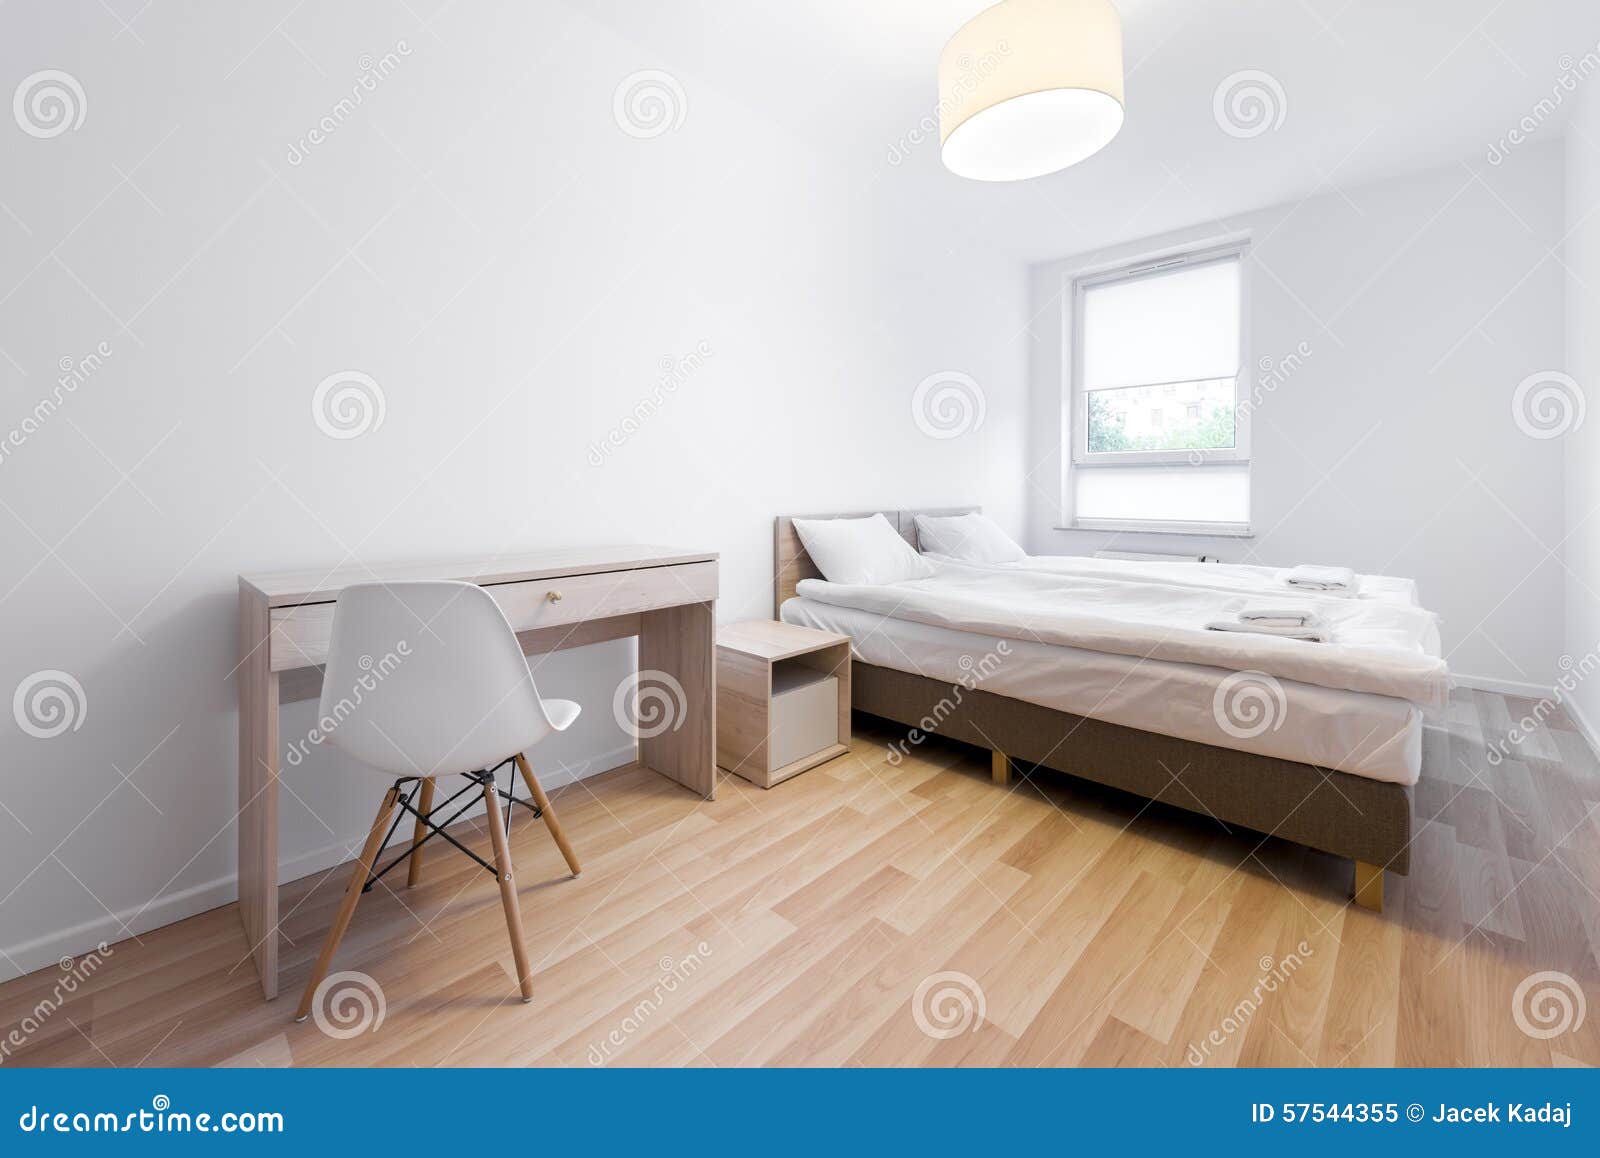 Modern And Small Sleeping Room Interior Design Stock Image Image Of Comfortable Headboard 57544355